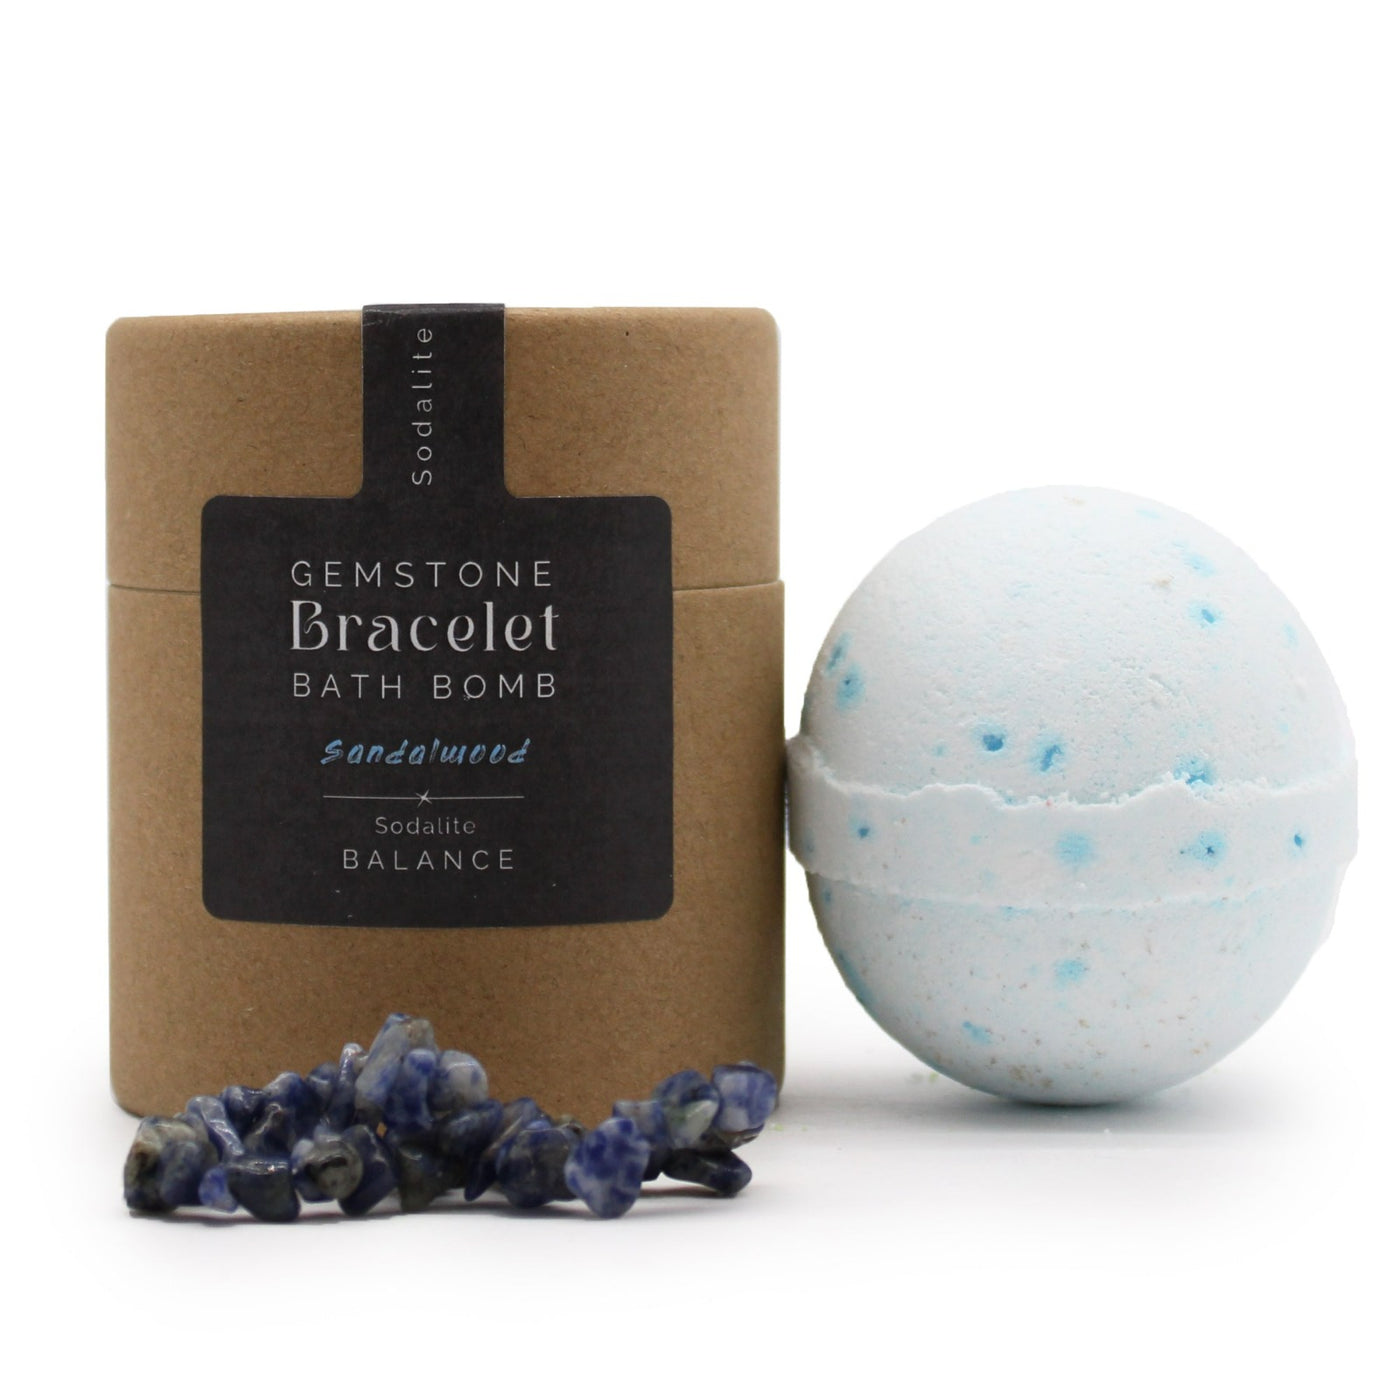 Bath Bomb Gift With Sodalite Gemstone Bracelet. 